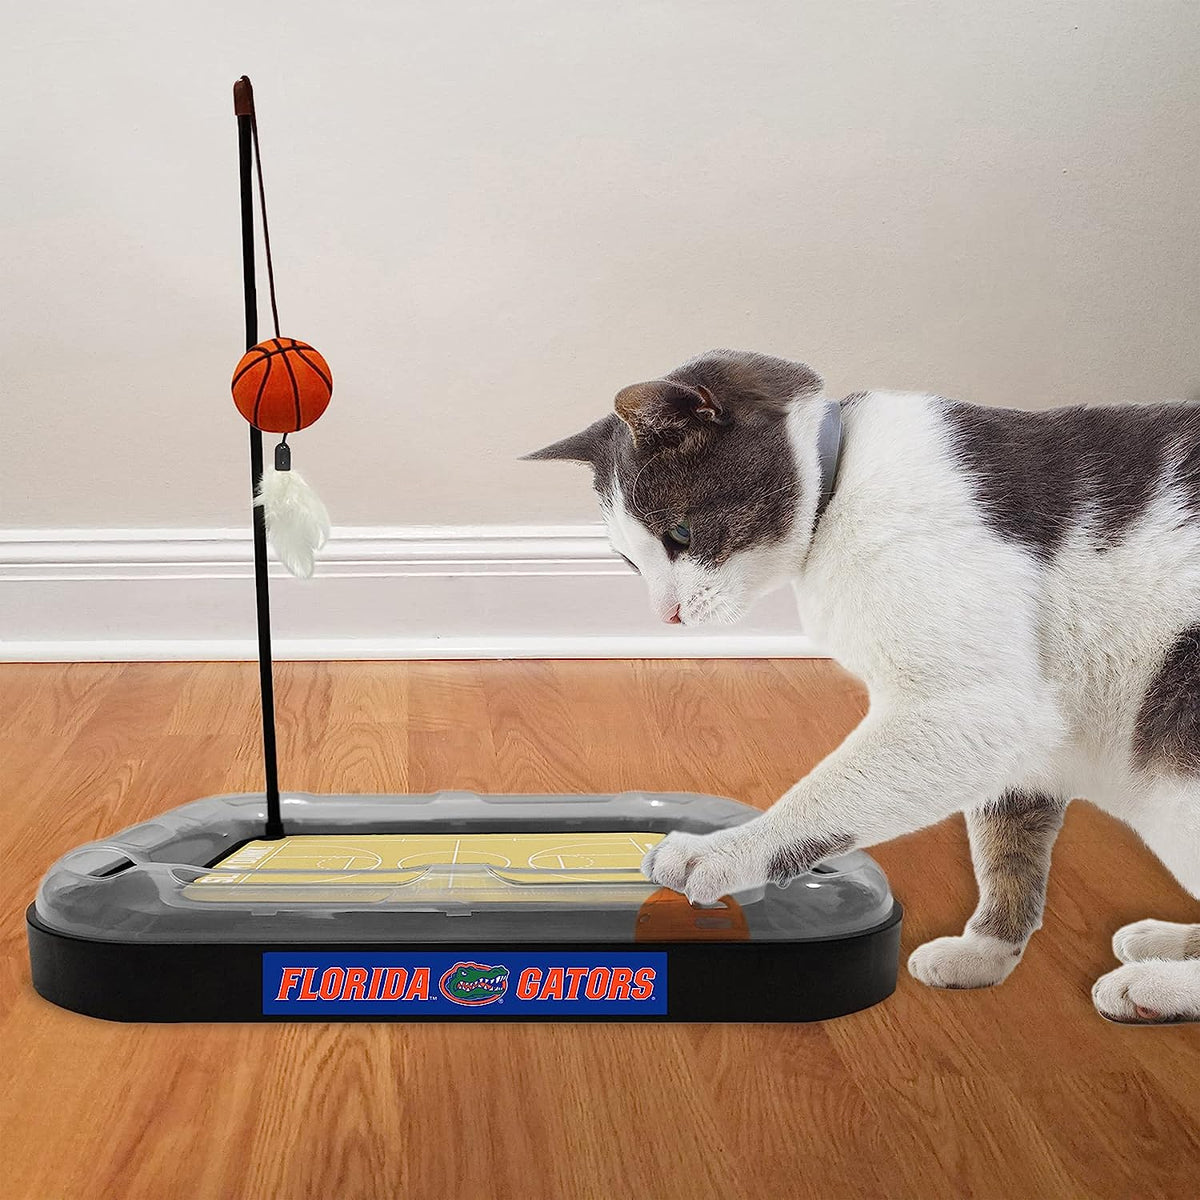 FL Gators Basketball Cat Scratcher Toy